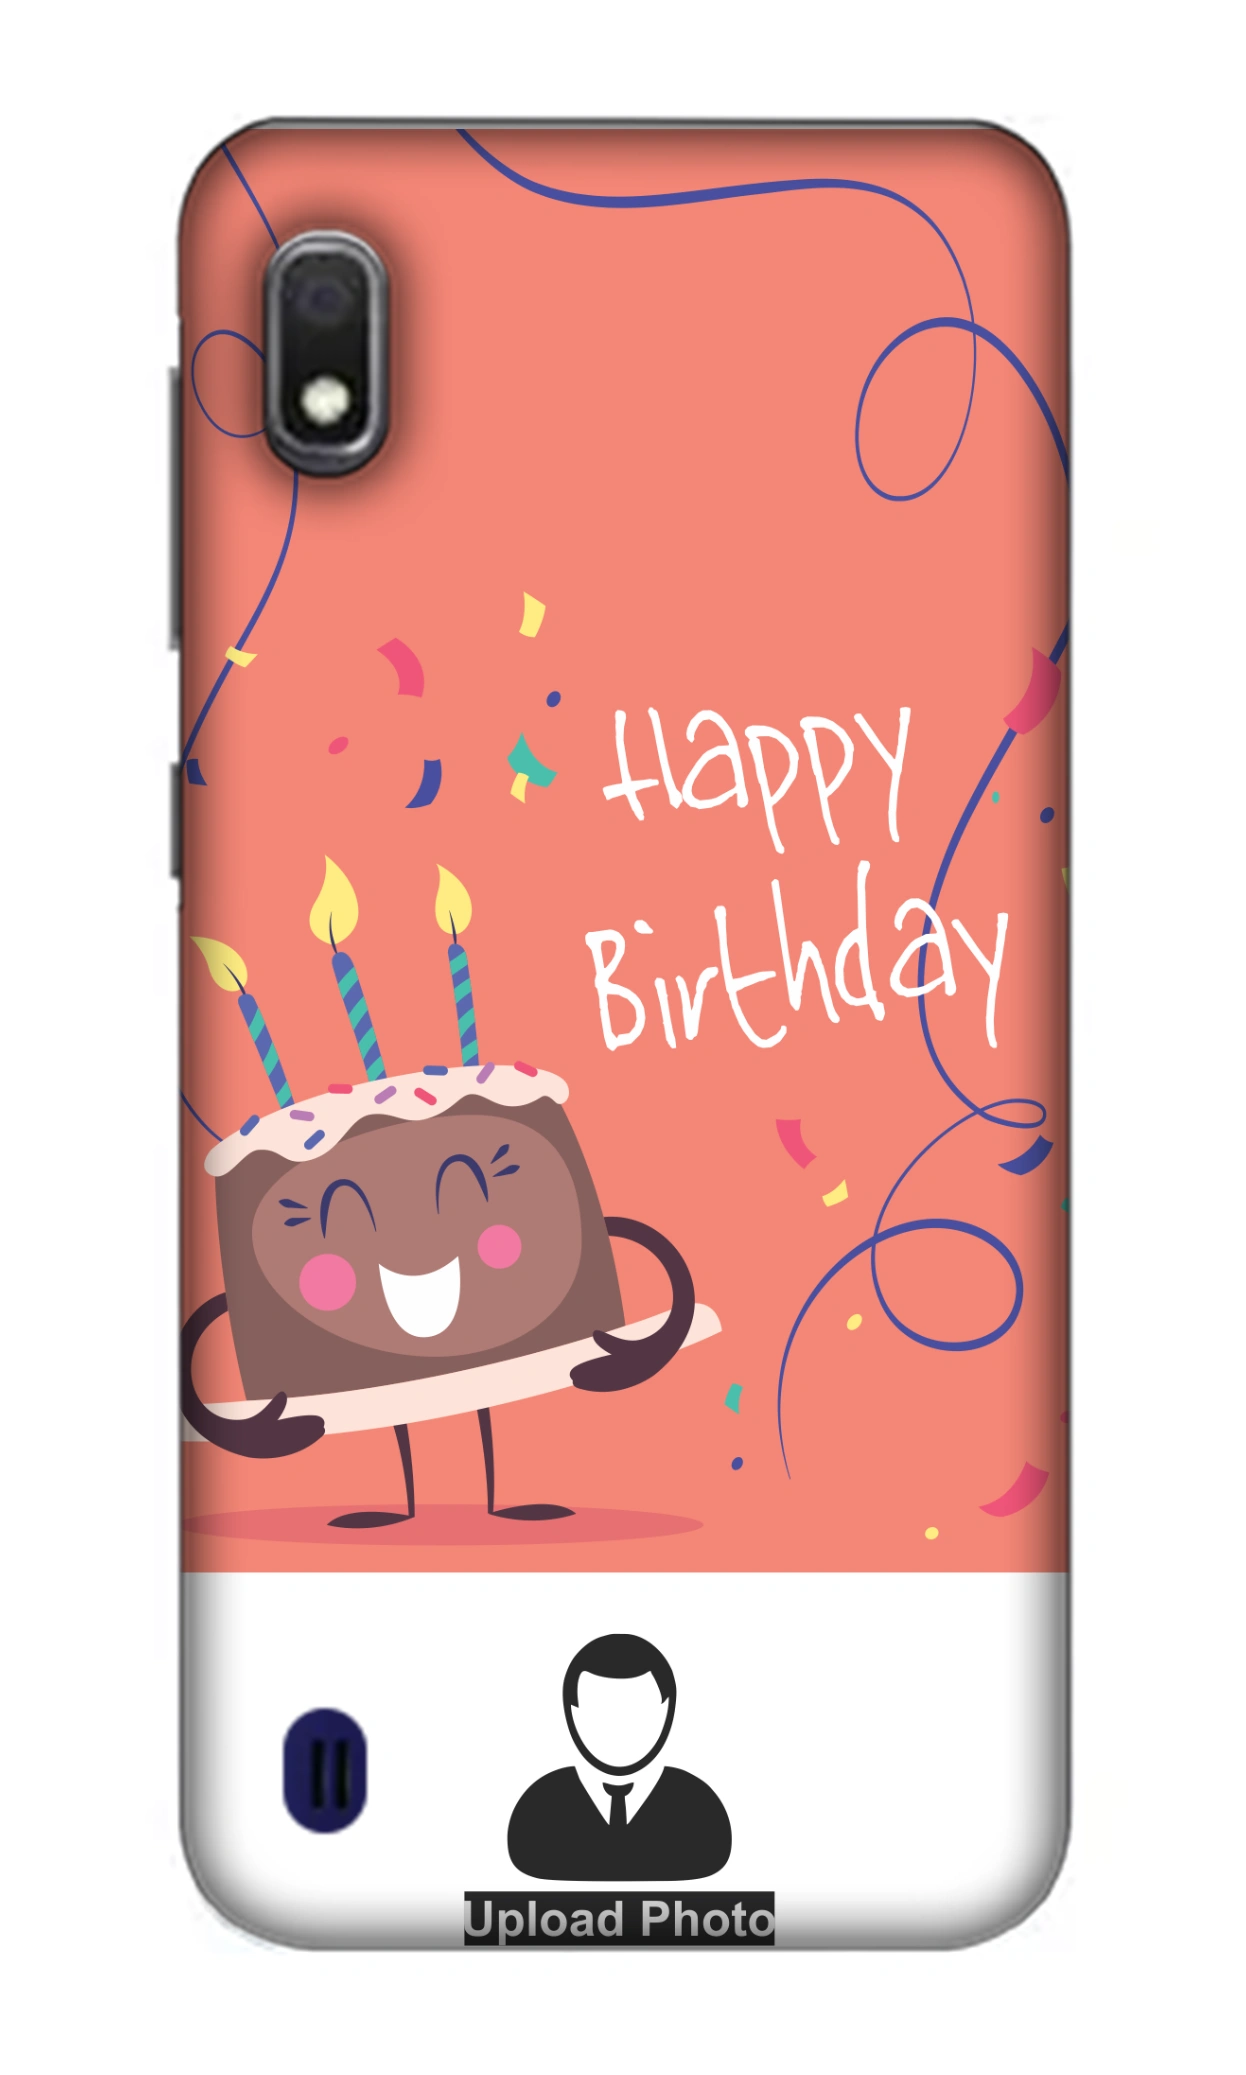 Mobile Phone Birthday Cake | Pauls Creative Cakes | Flickr